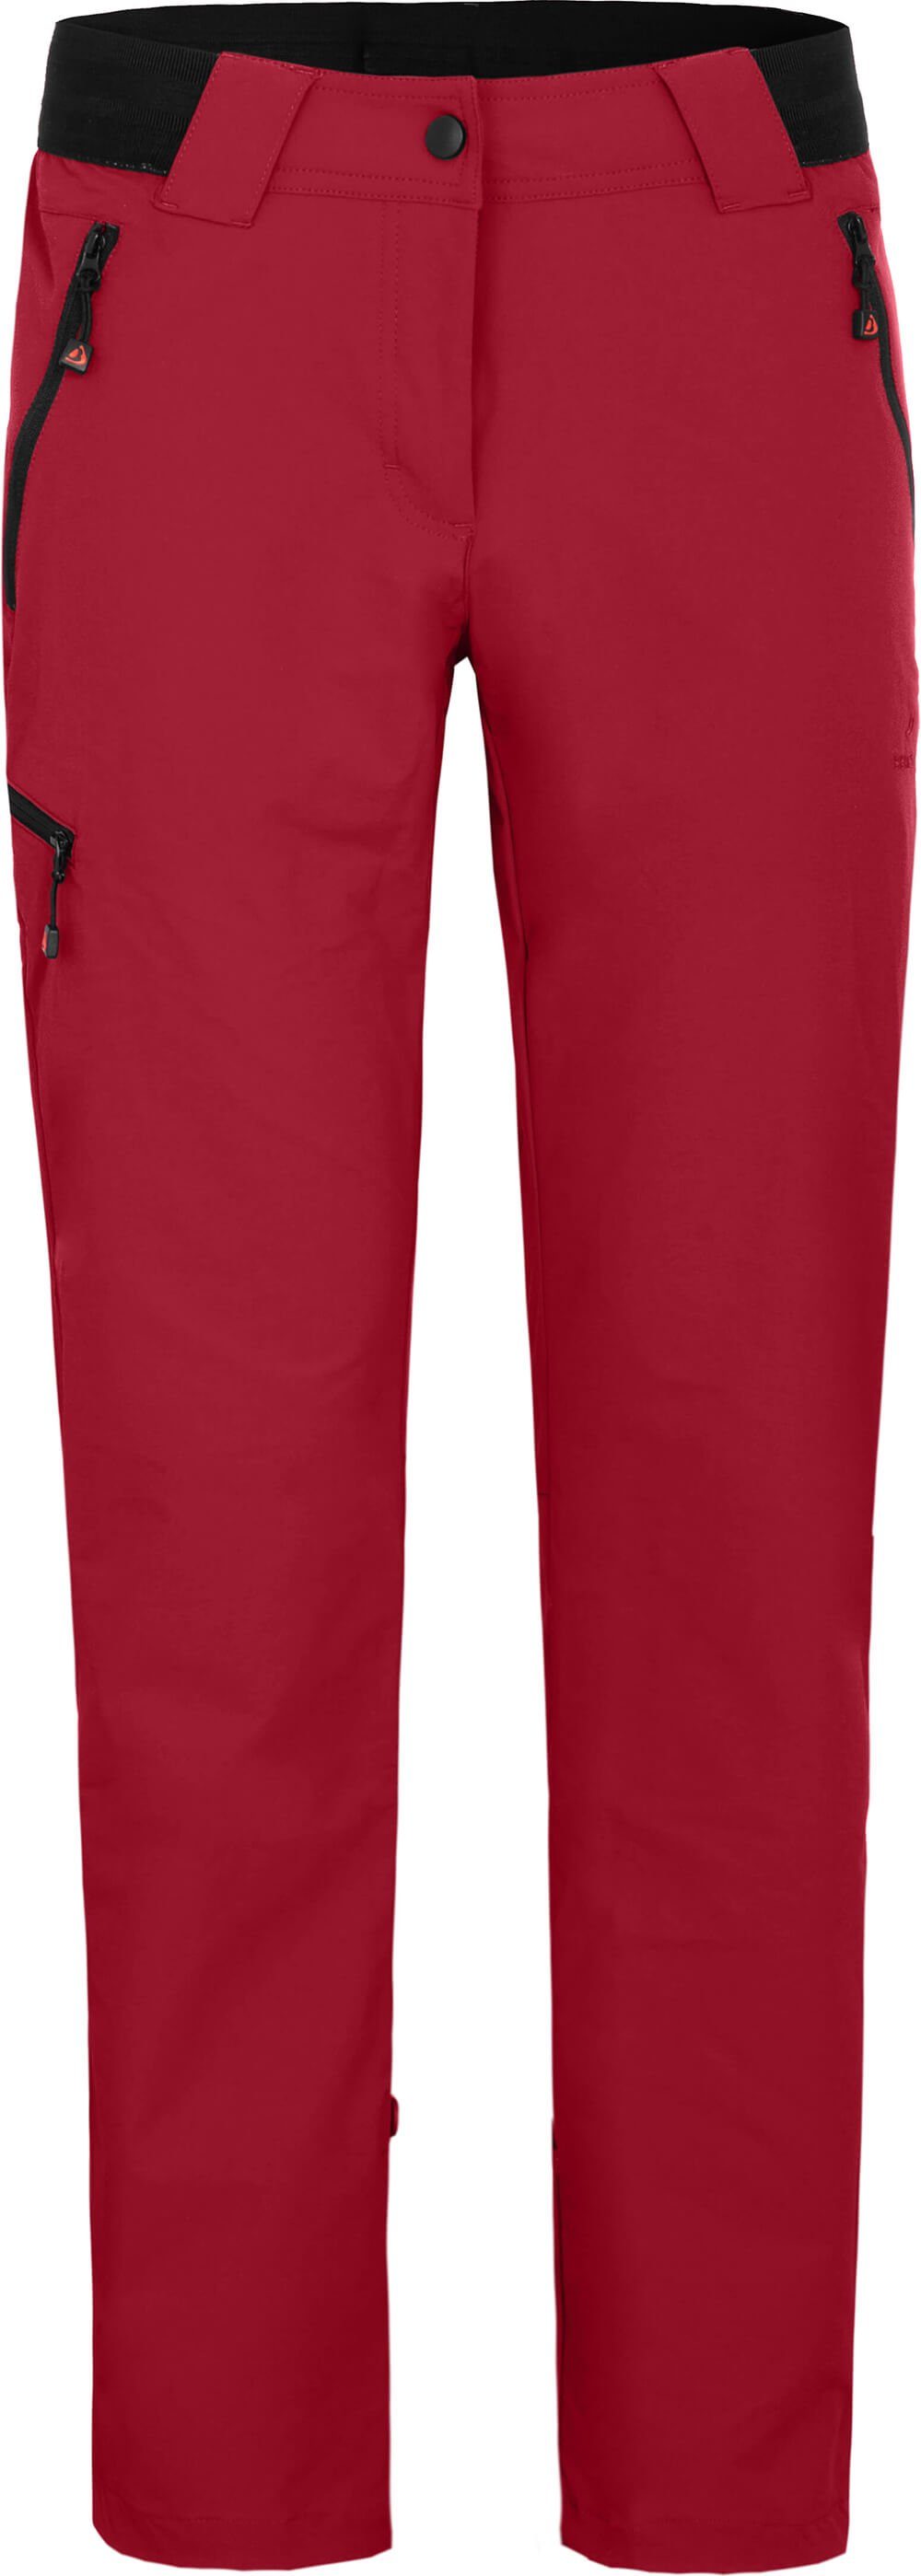 Bergson Outdoorhose »VIDAA COMFORT« Damen Wanderhose, leicht,  strapazierfähig, Kurzgrößen, rot online kaufen | OTTO